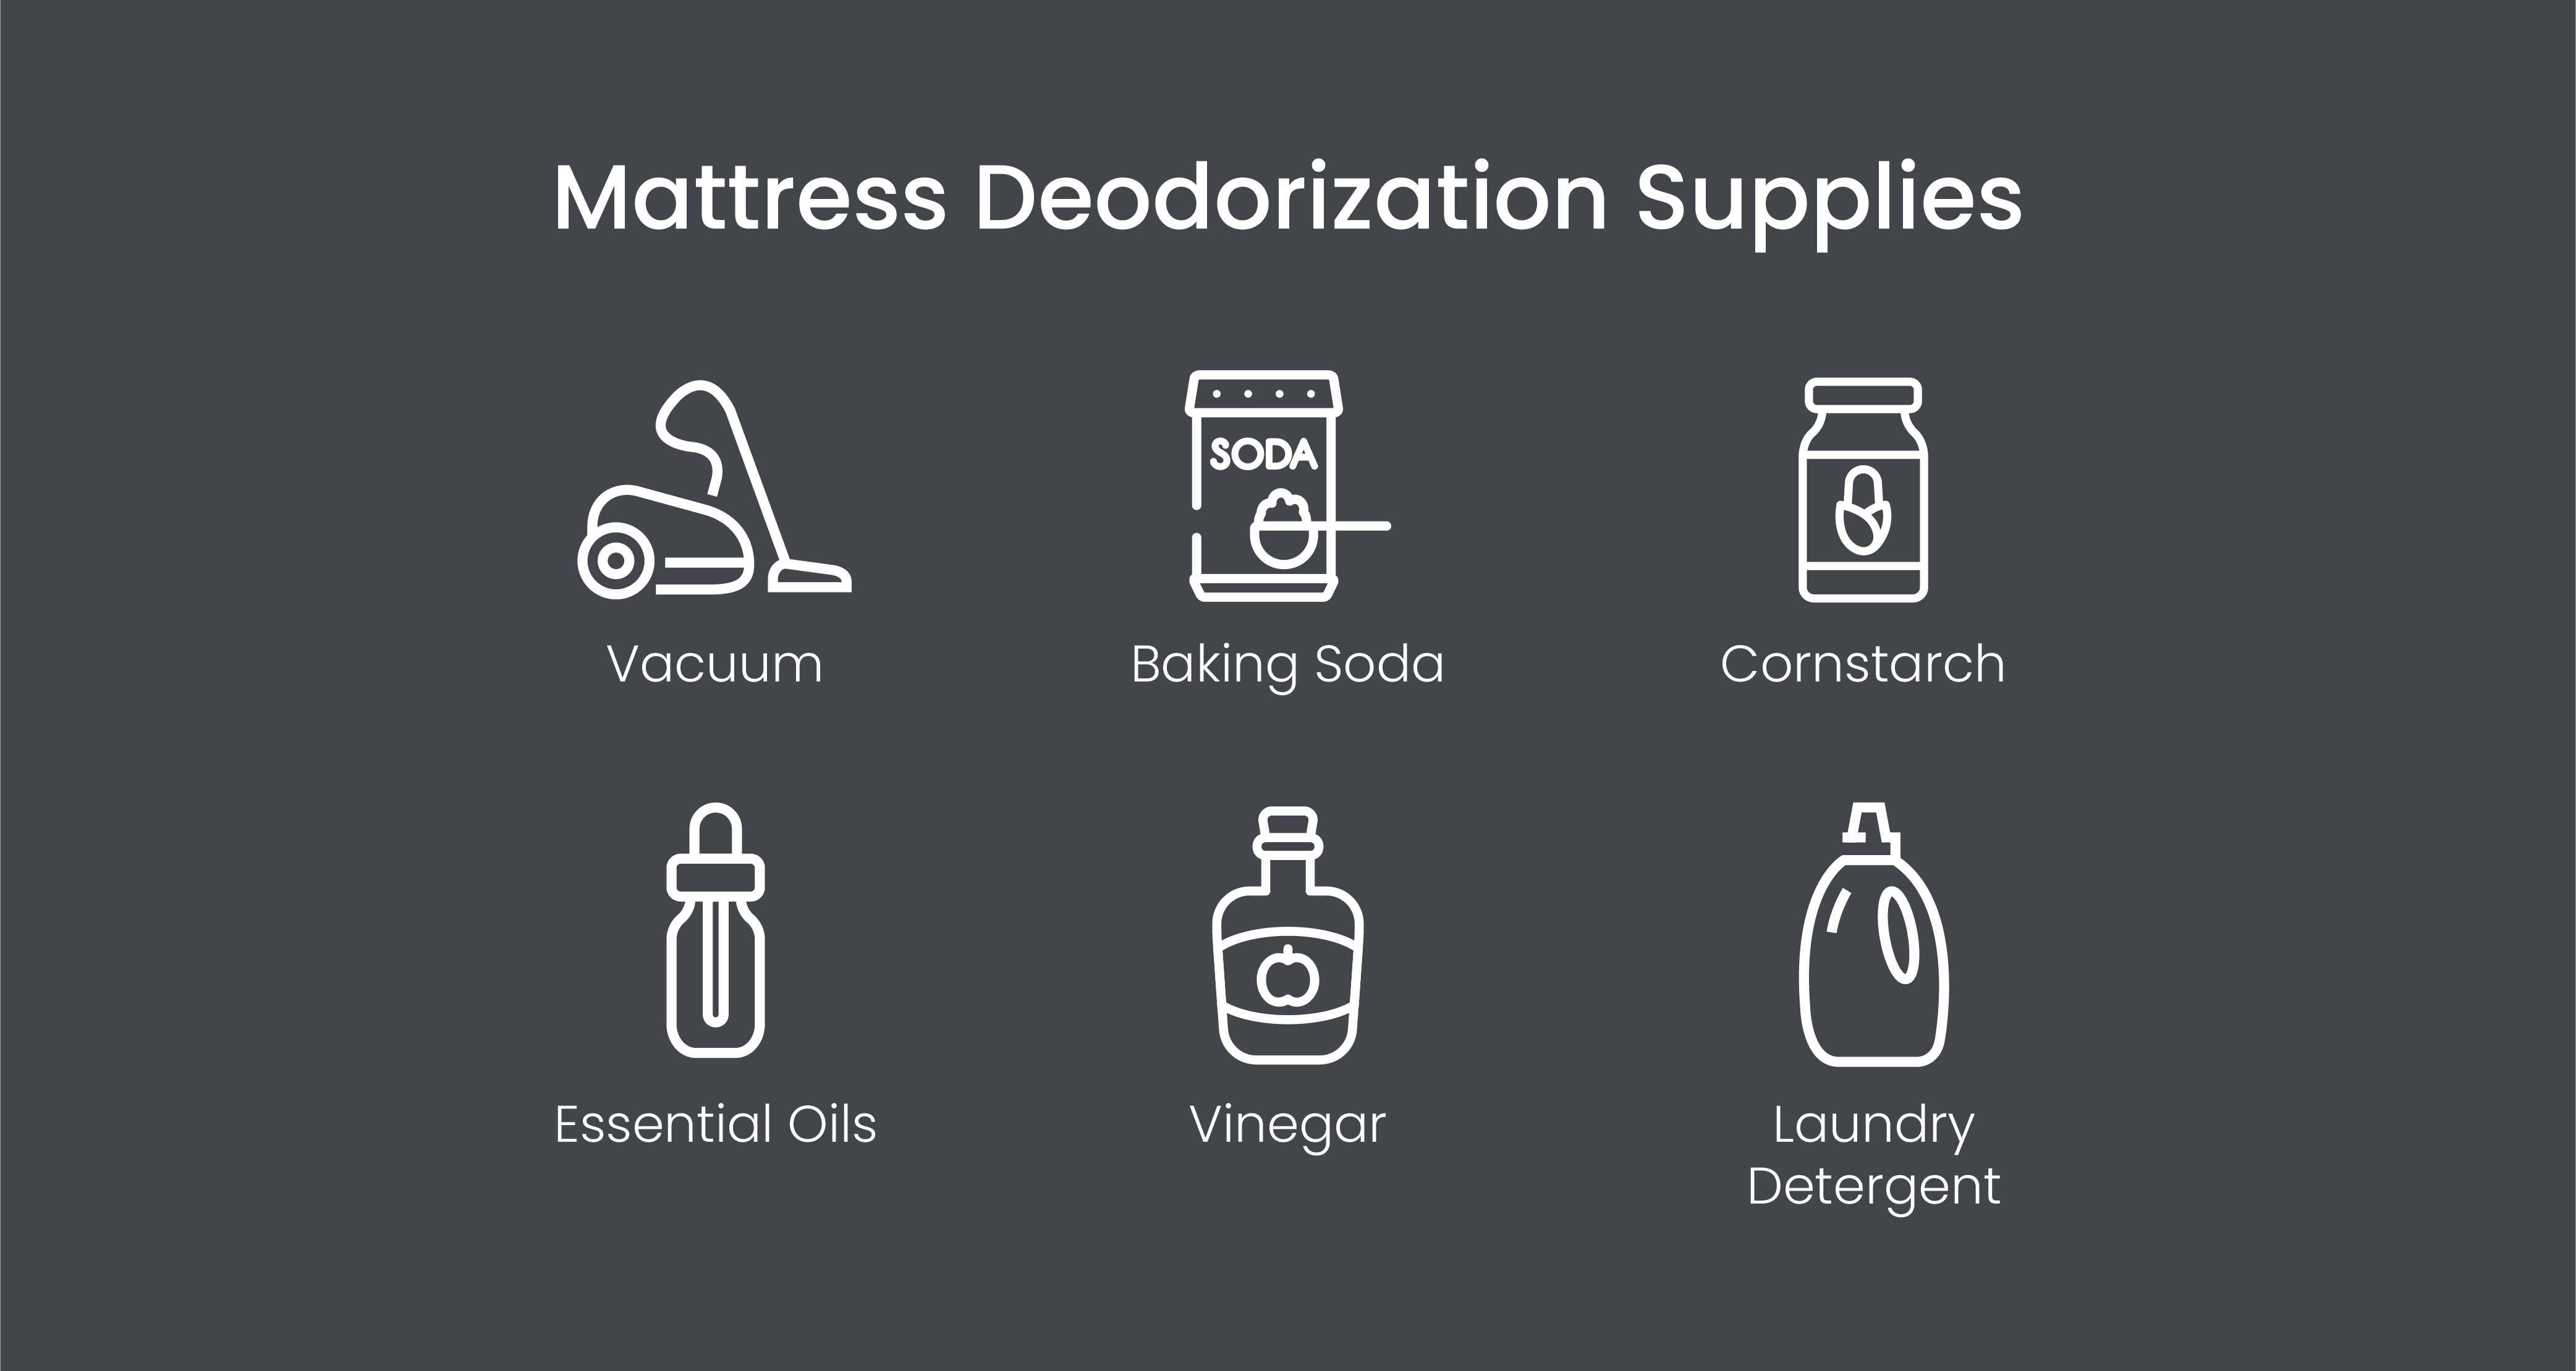 Mattress deodorization supplies